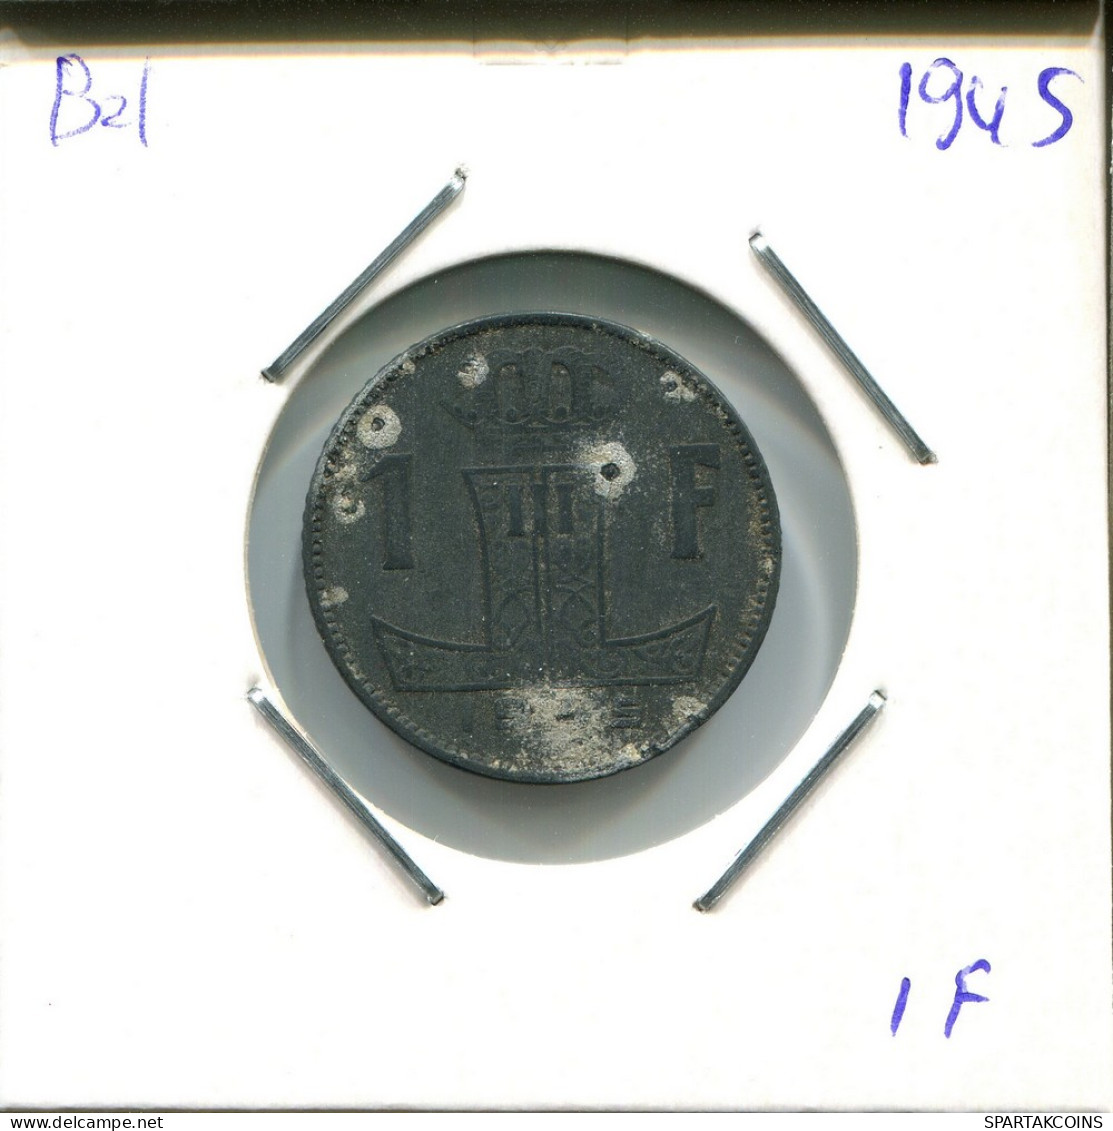 1 FRANC 1945 BELGIE-BELGIQUE BELGIUM Coin #AU616.U - 1 Franc